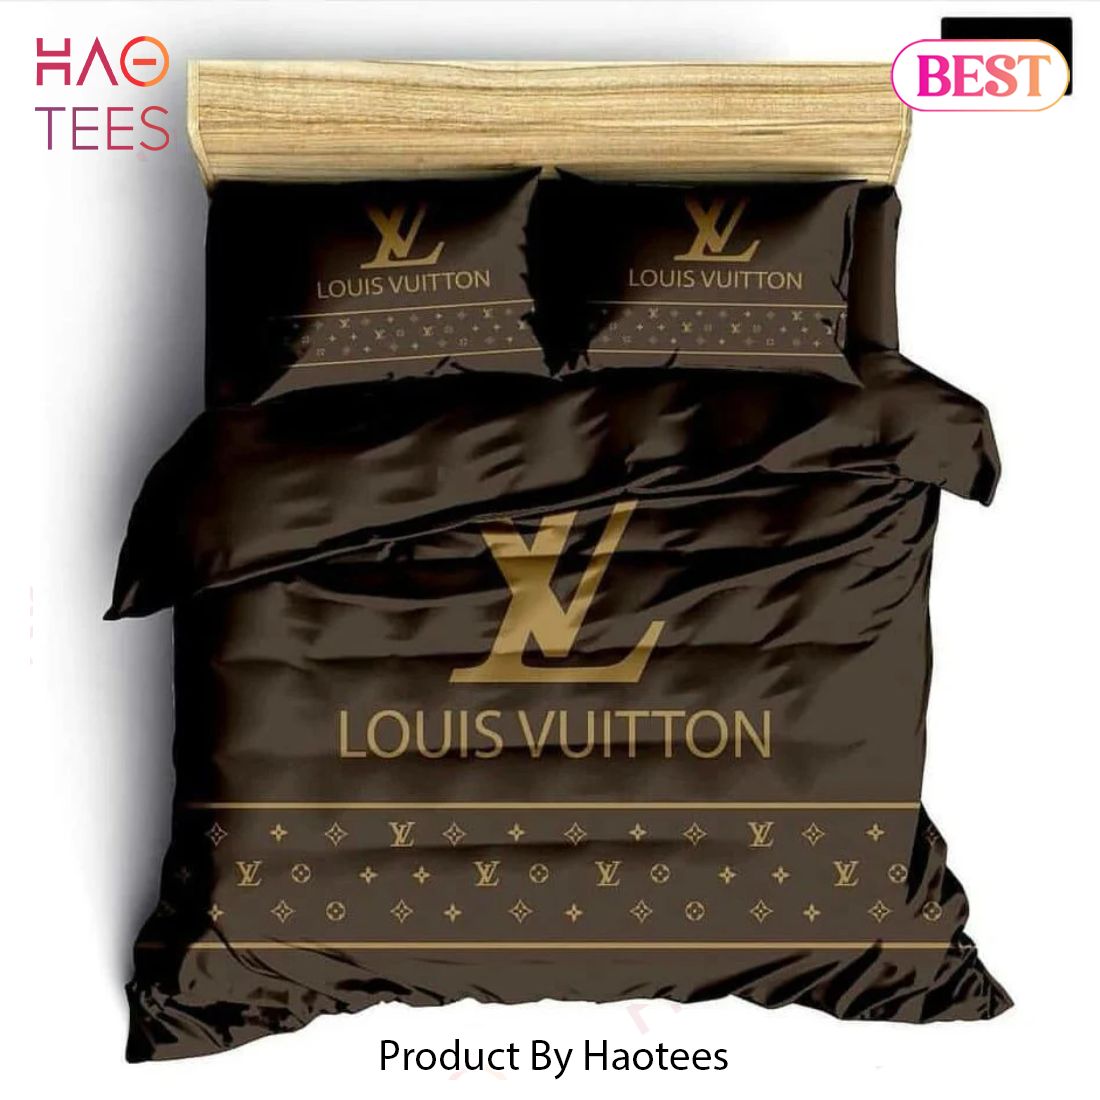 NEW FASHION] Louis Vuitton Golden Logo Brown Black Luxury Brand